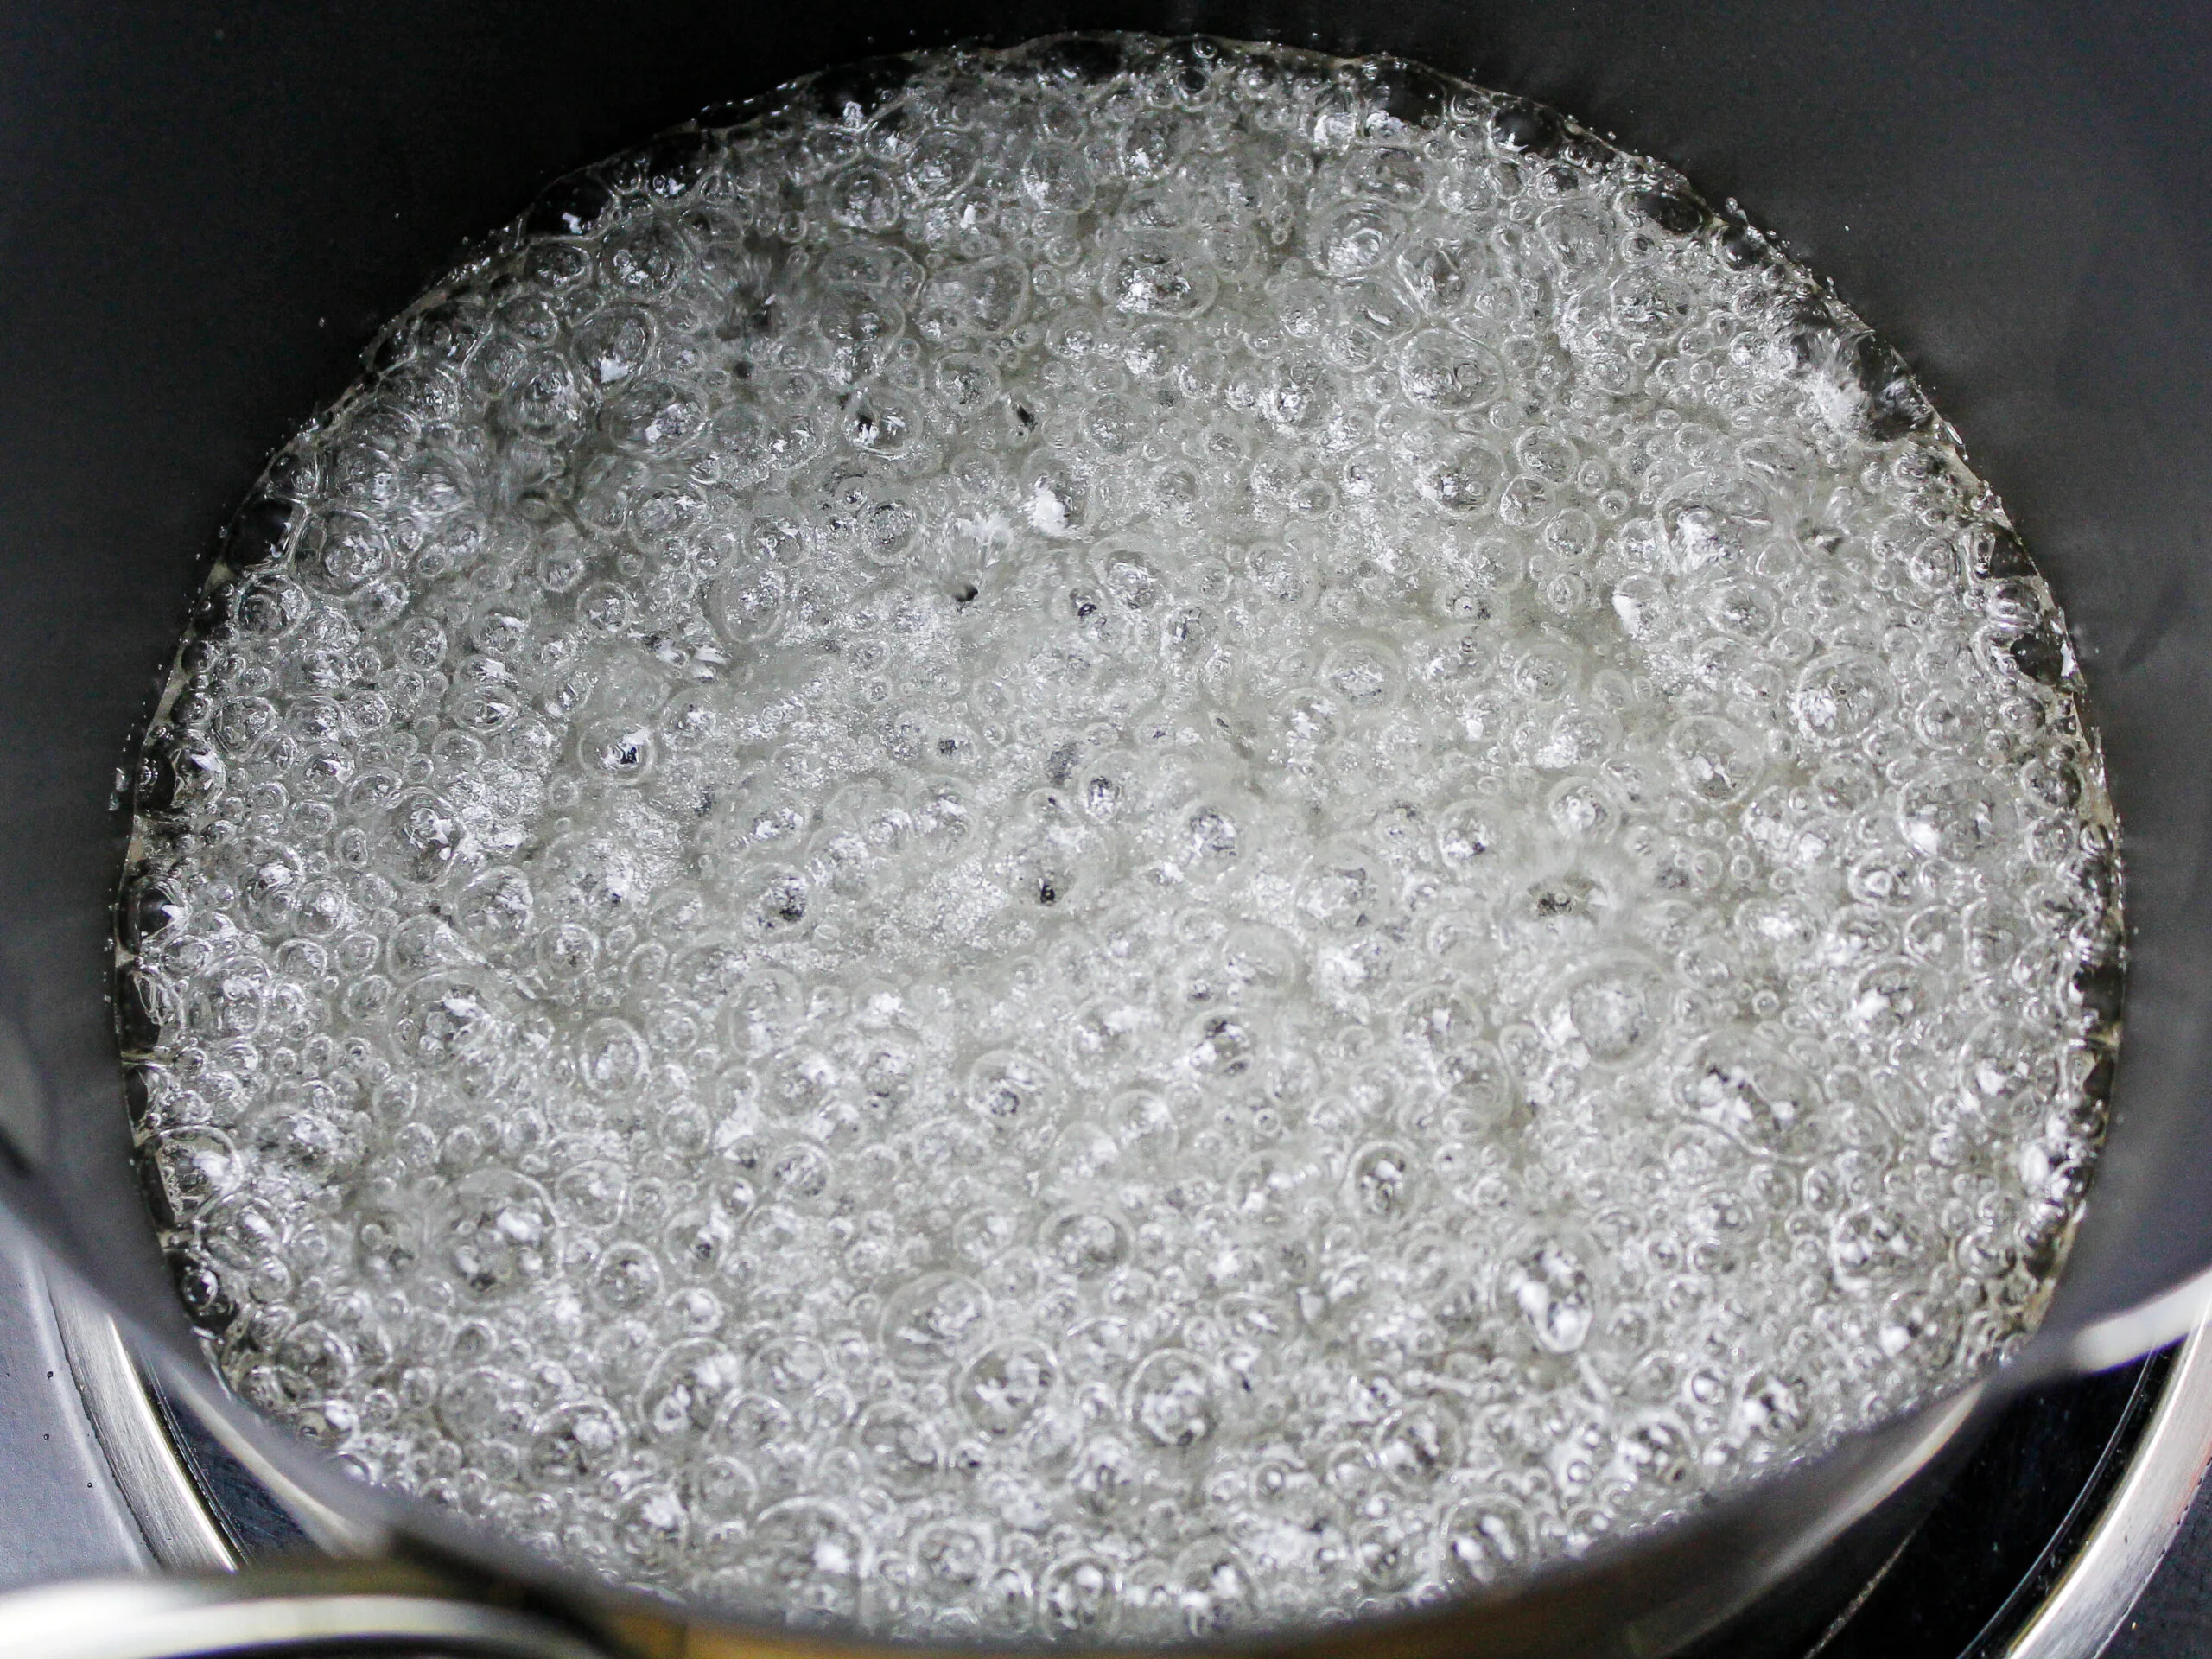 image of sugar and water being boiled to make sugar shards or sugar glass